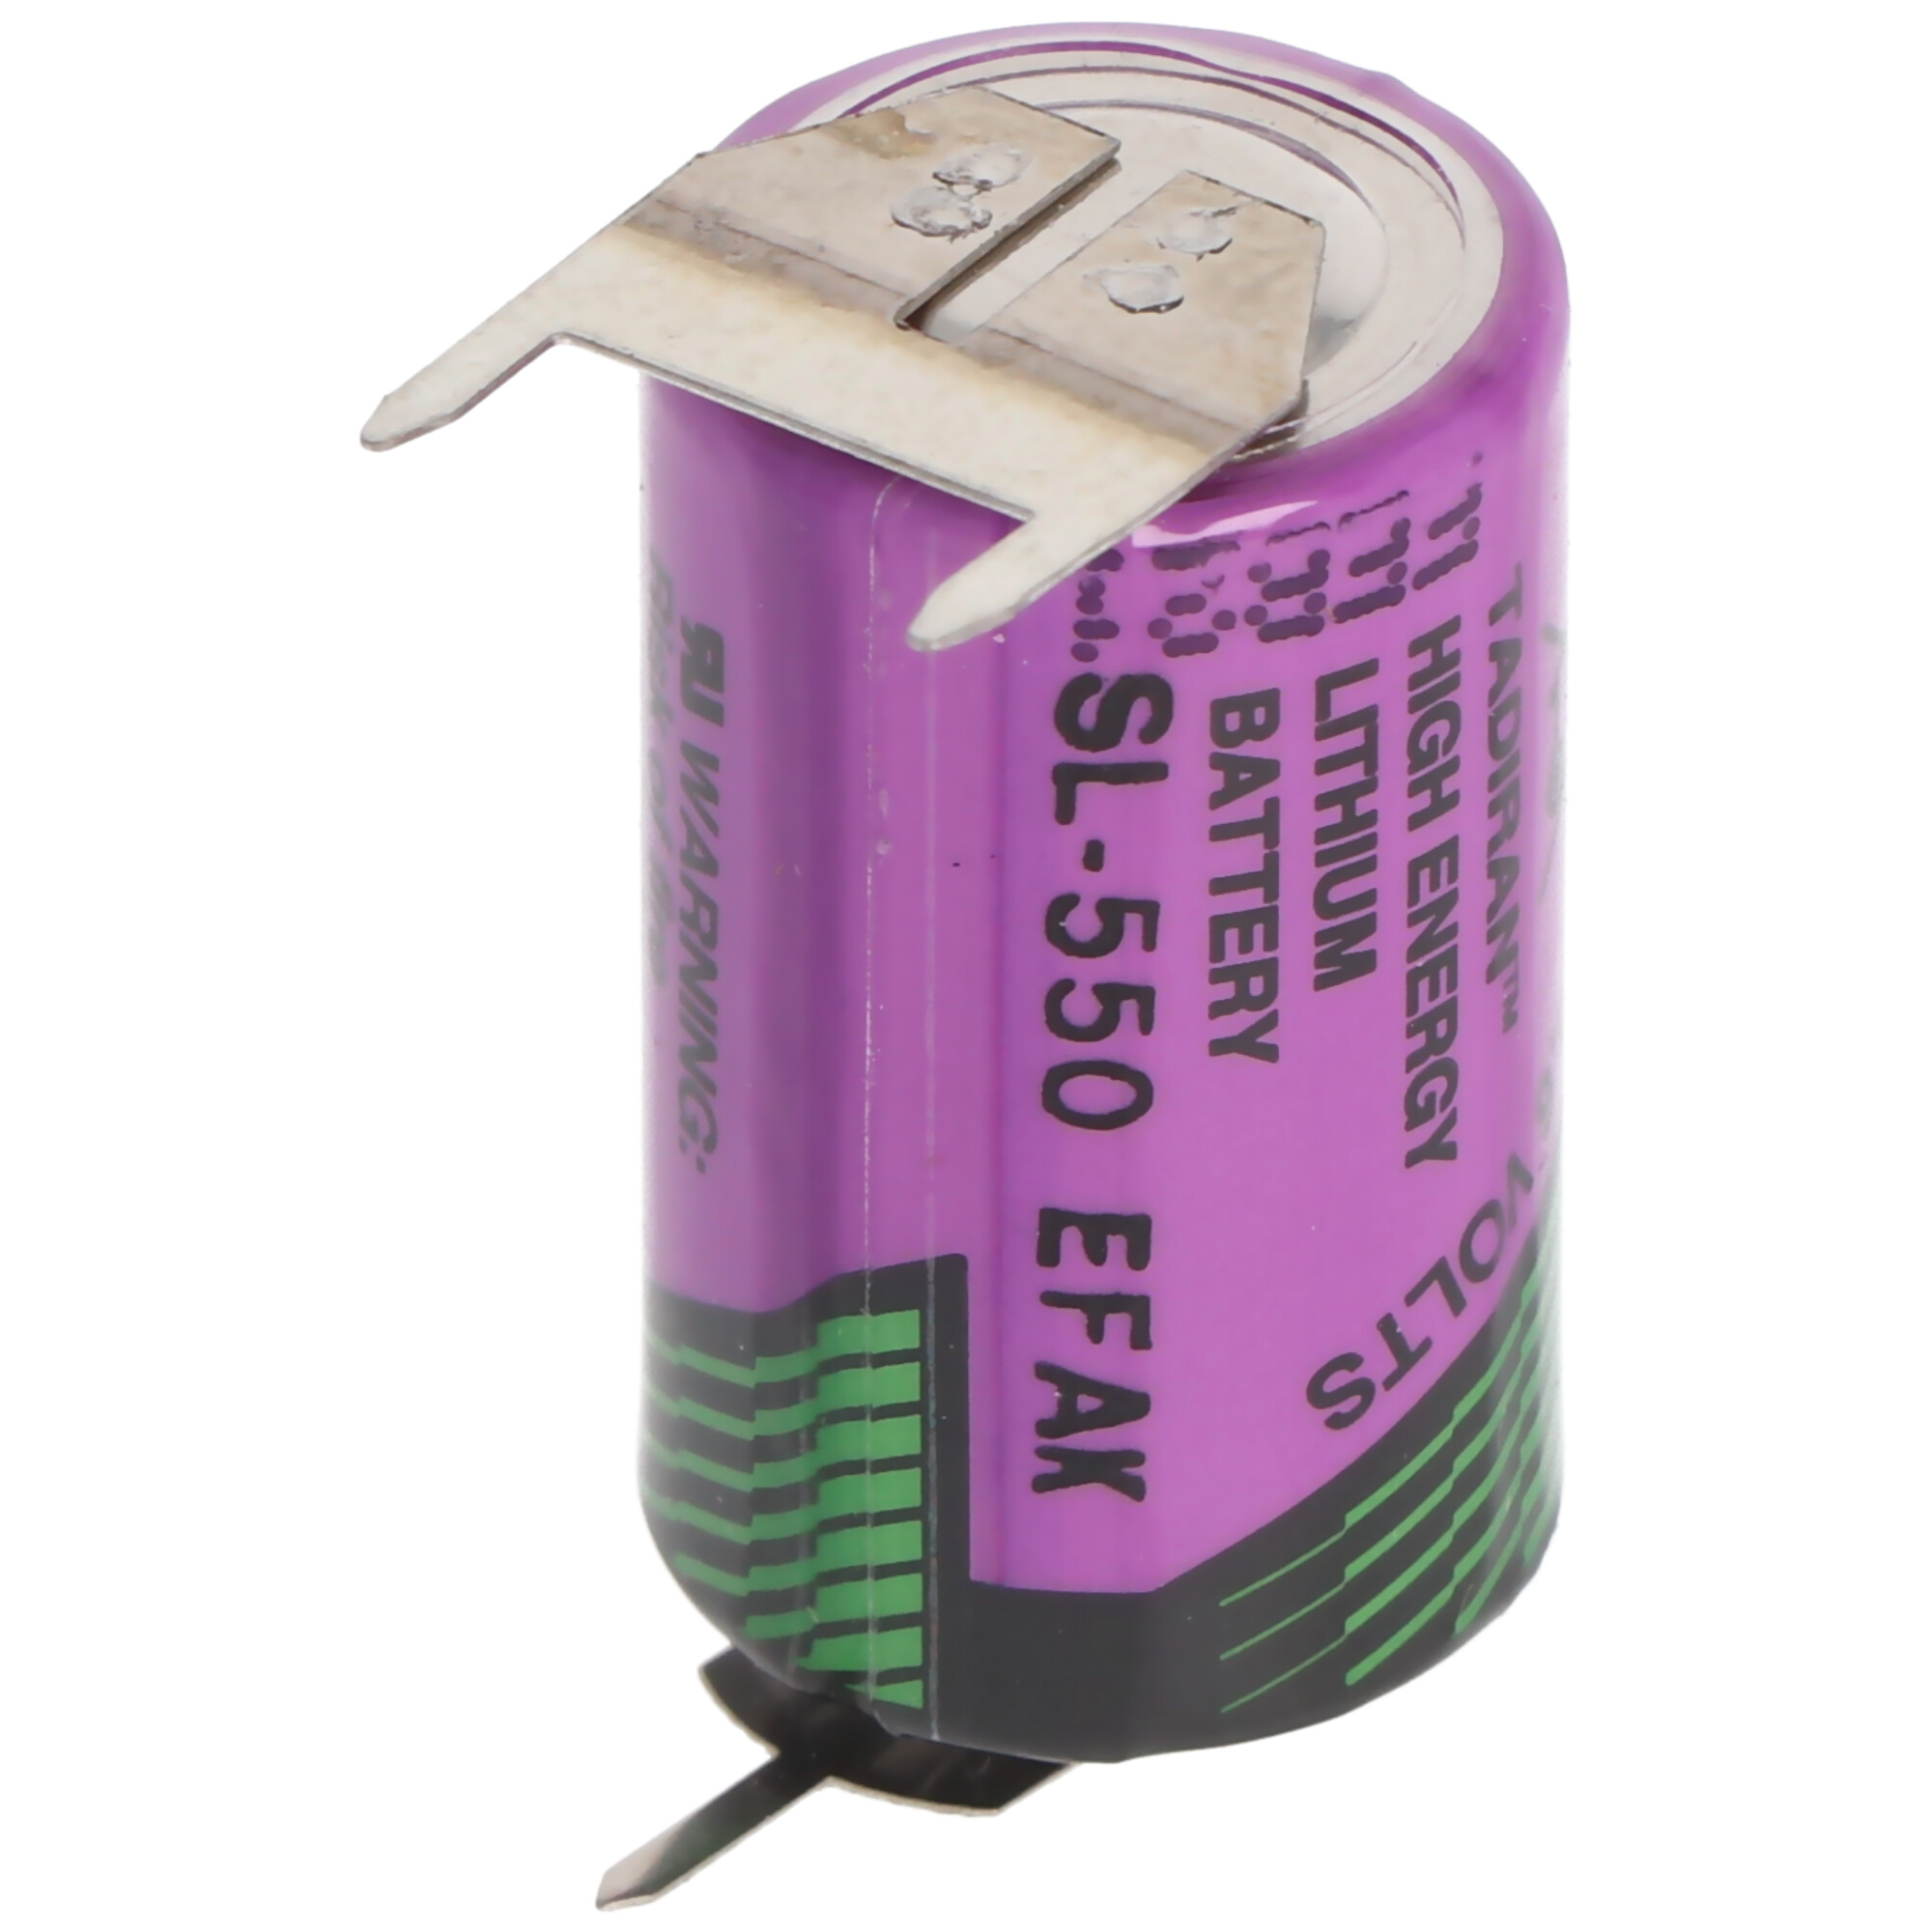 Tadiran LTC SL-550/PT Lithium-Thionylchlorid Batterie 1/2AA mit Printanschluss +/-- mit 10mm Rastermaß